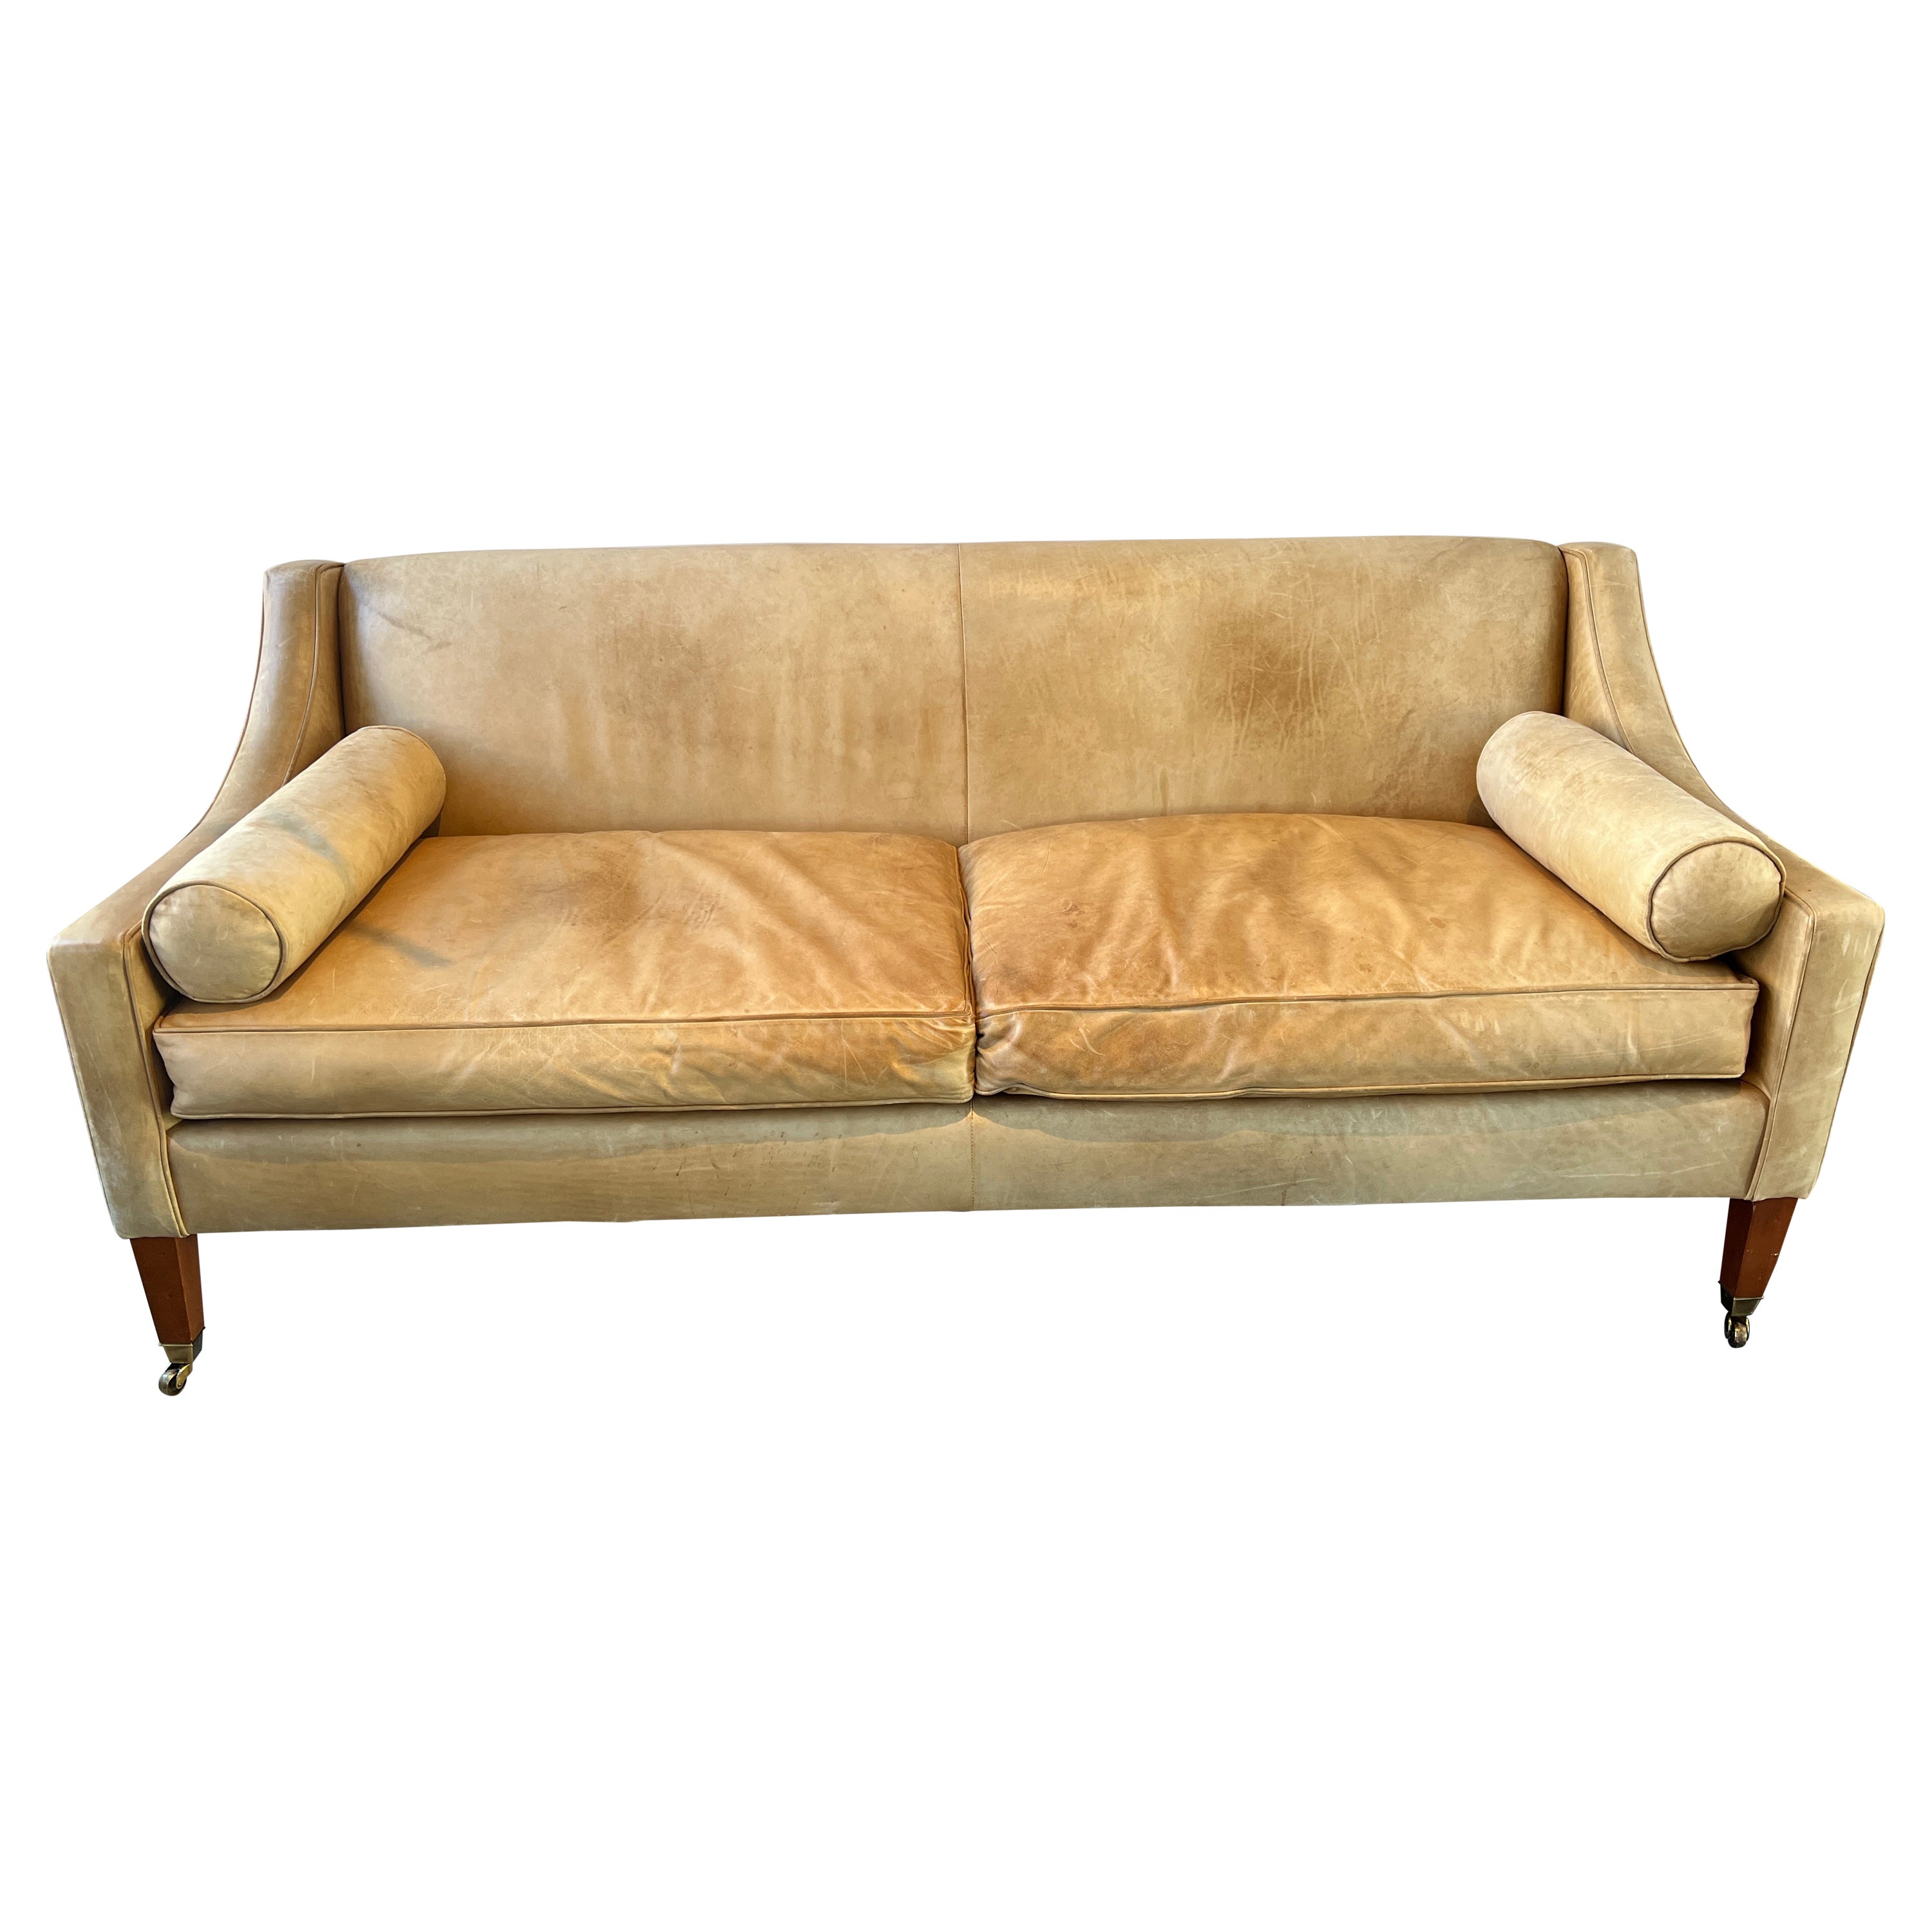 Ralph Lauren Leather Sofa - 9 For Sale on 1stDibs | ralph lauren leather  couch, ralph lauren leather couch for sale, ralph lauren leather sofas